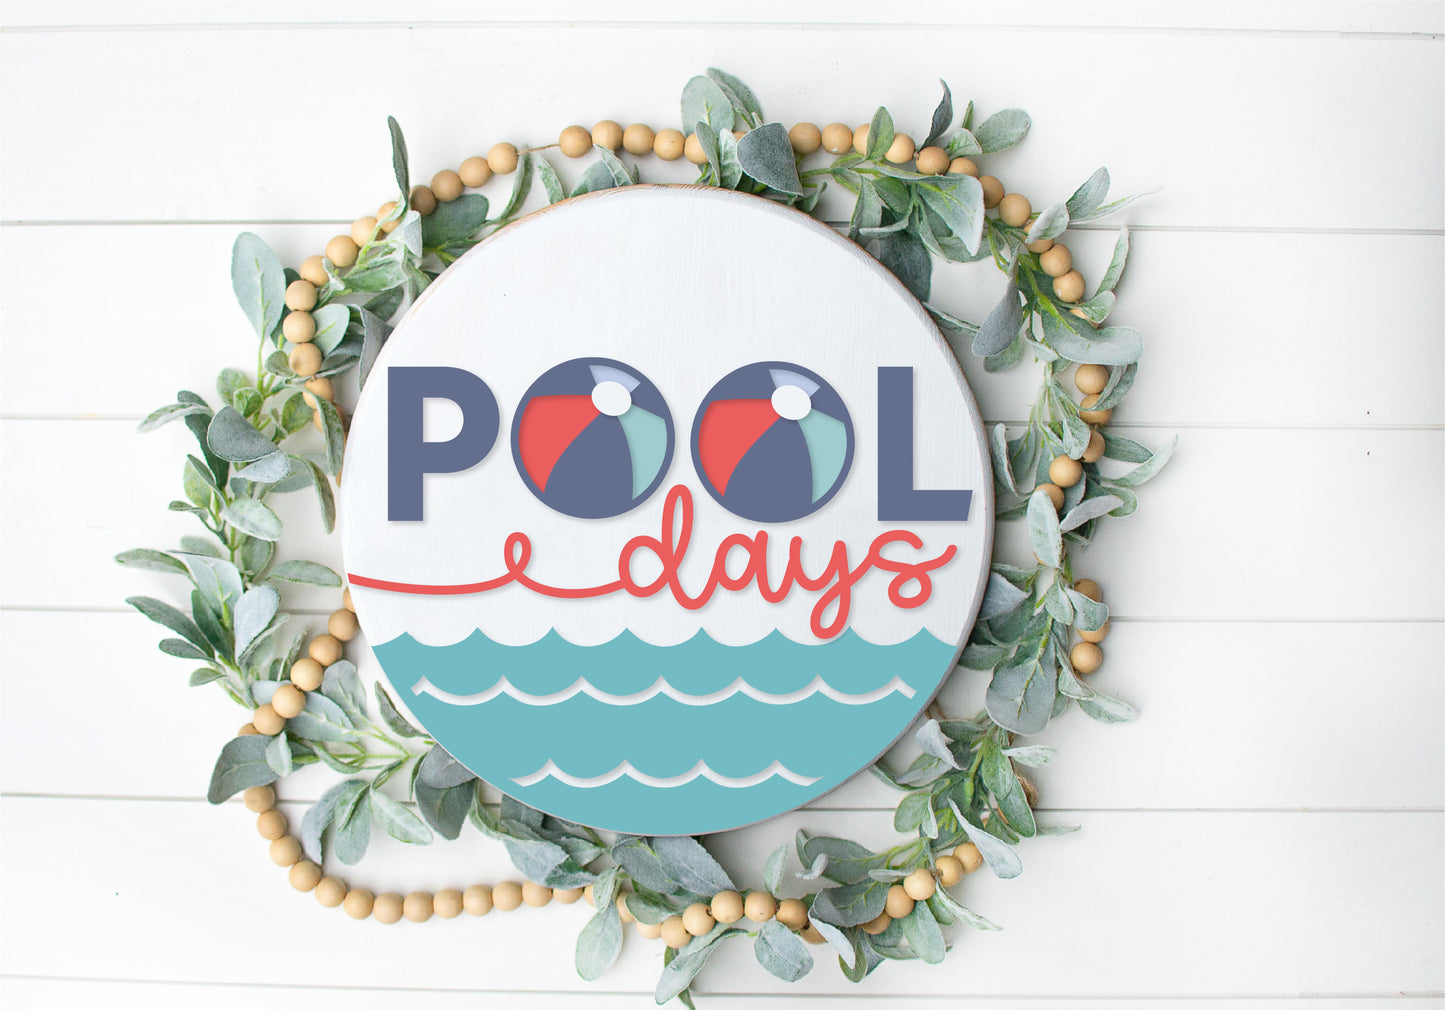 Pool days sign